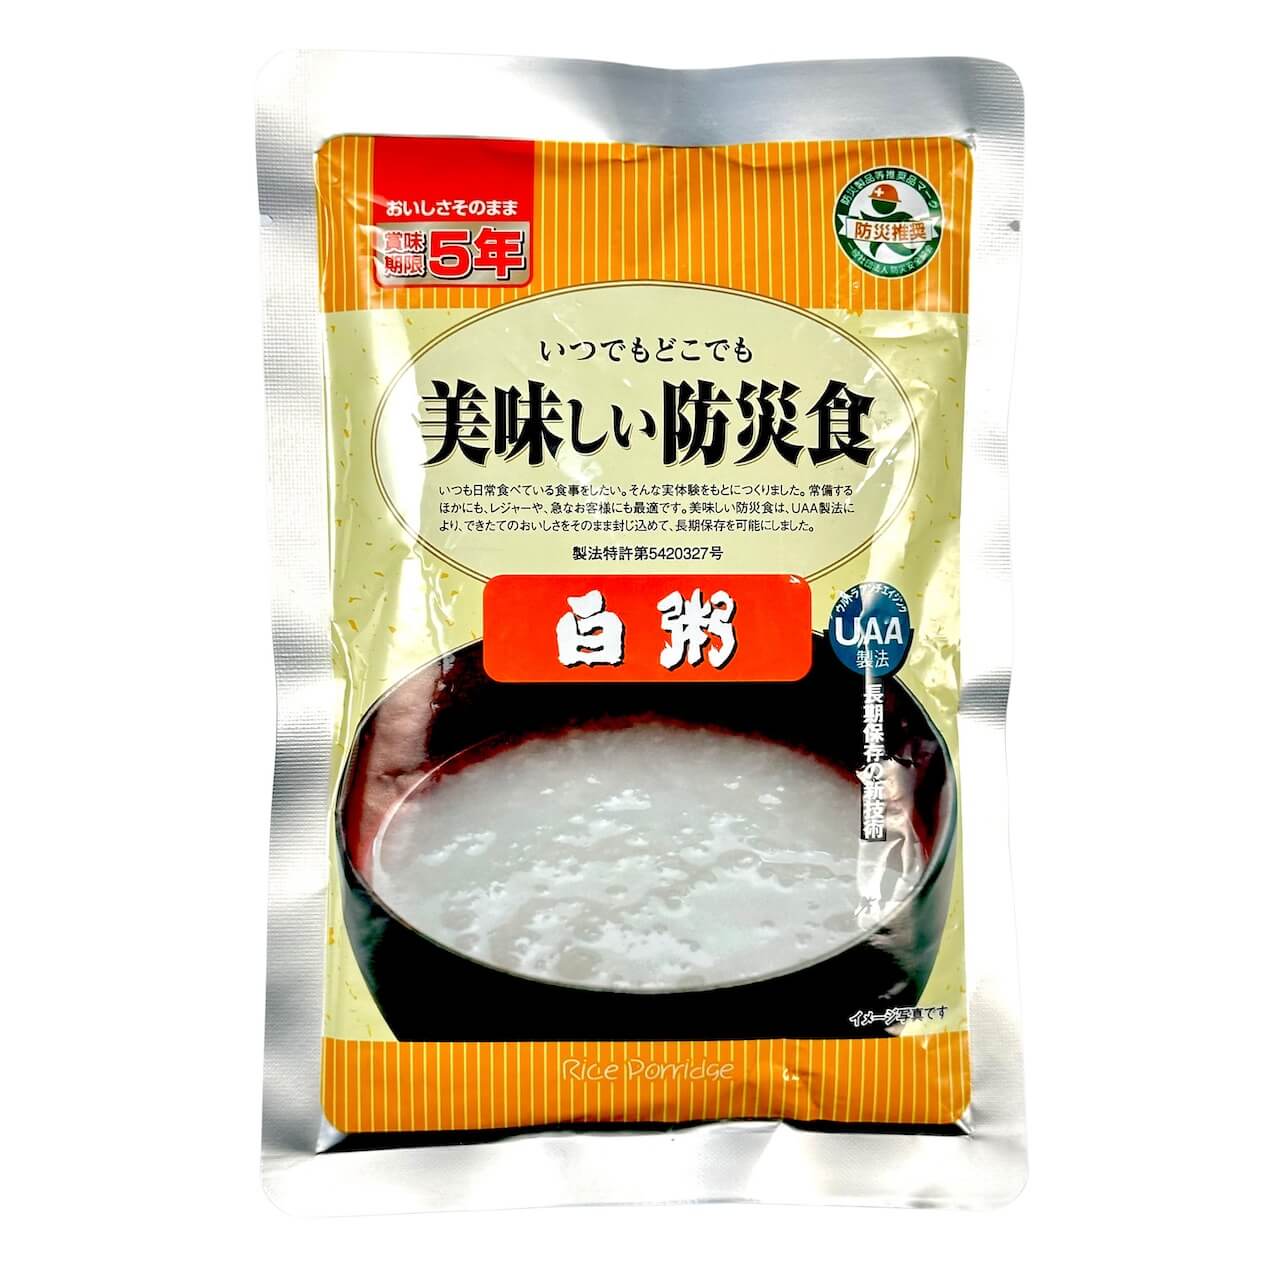 Delicious disaster prevention food: white porridge (manufacturing process patent no. 5420327)